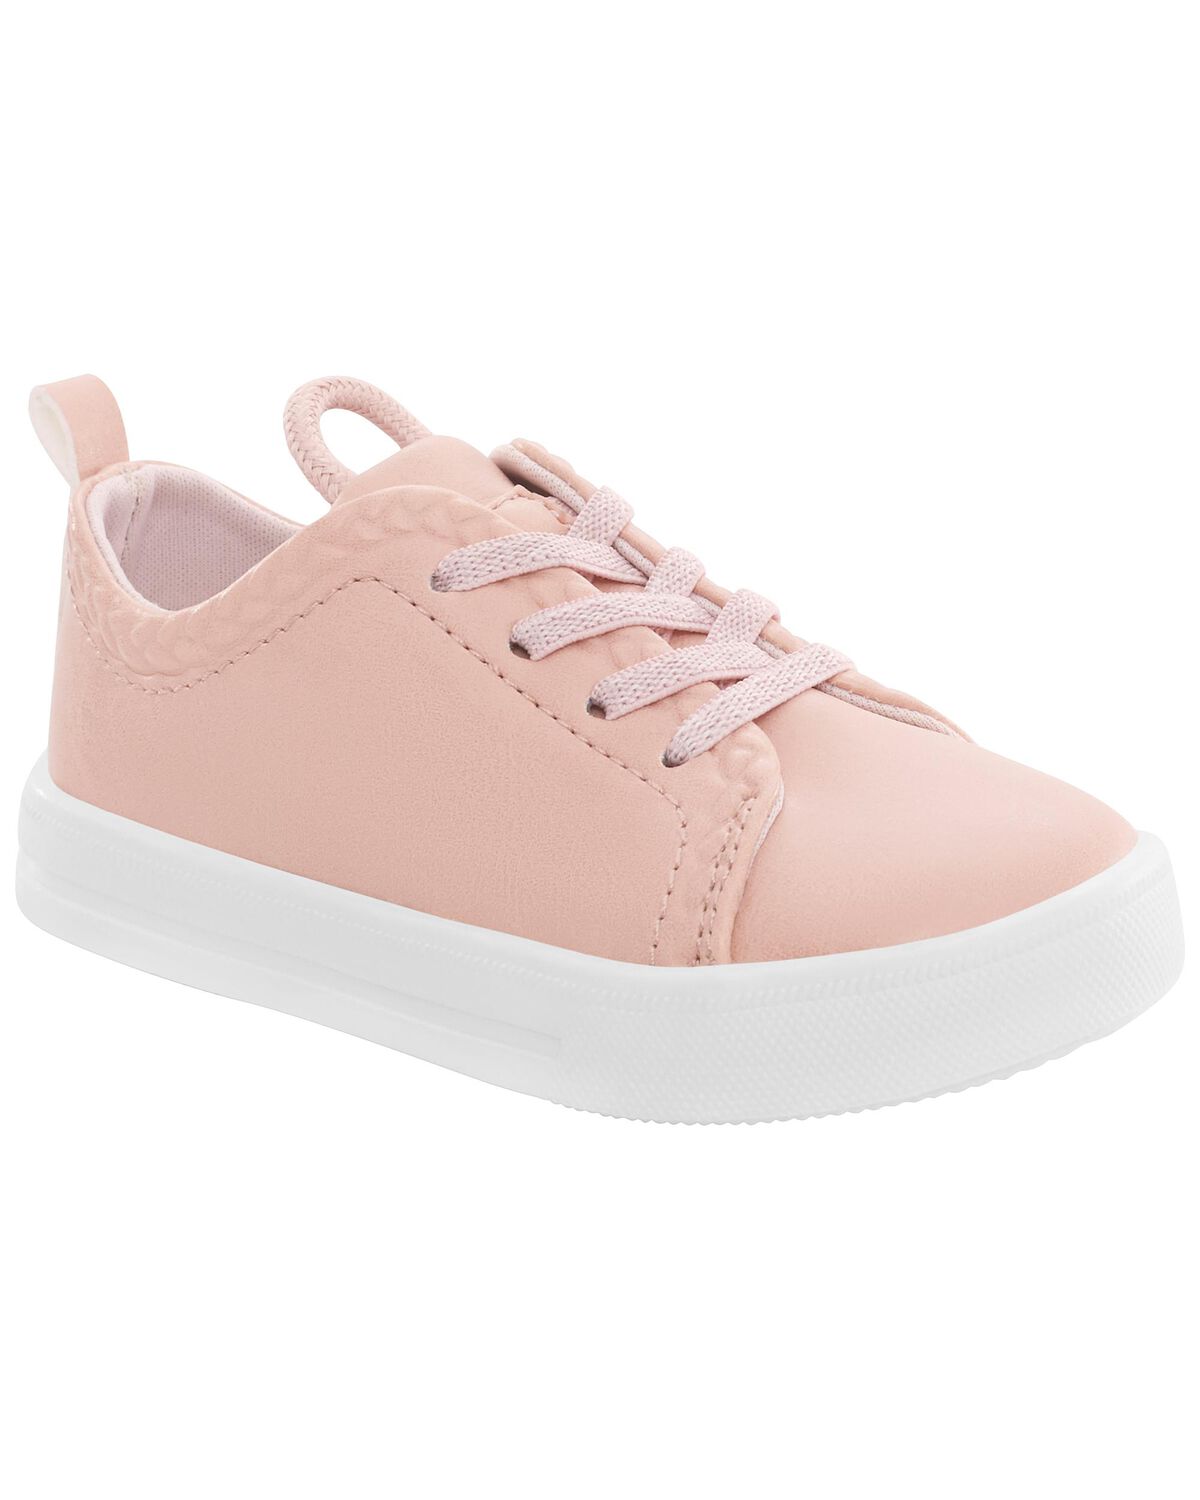 Pink Toddler Slip-On Sneakers | oshkosh.com